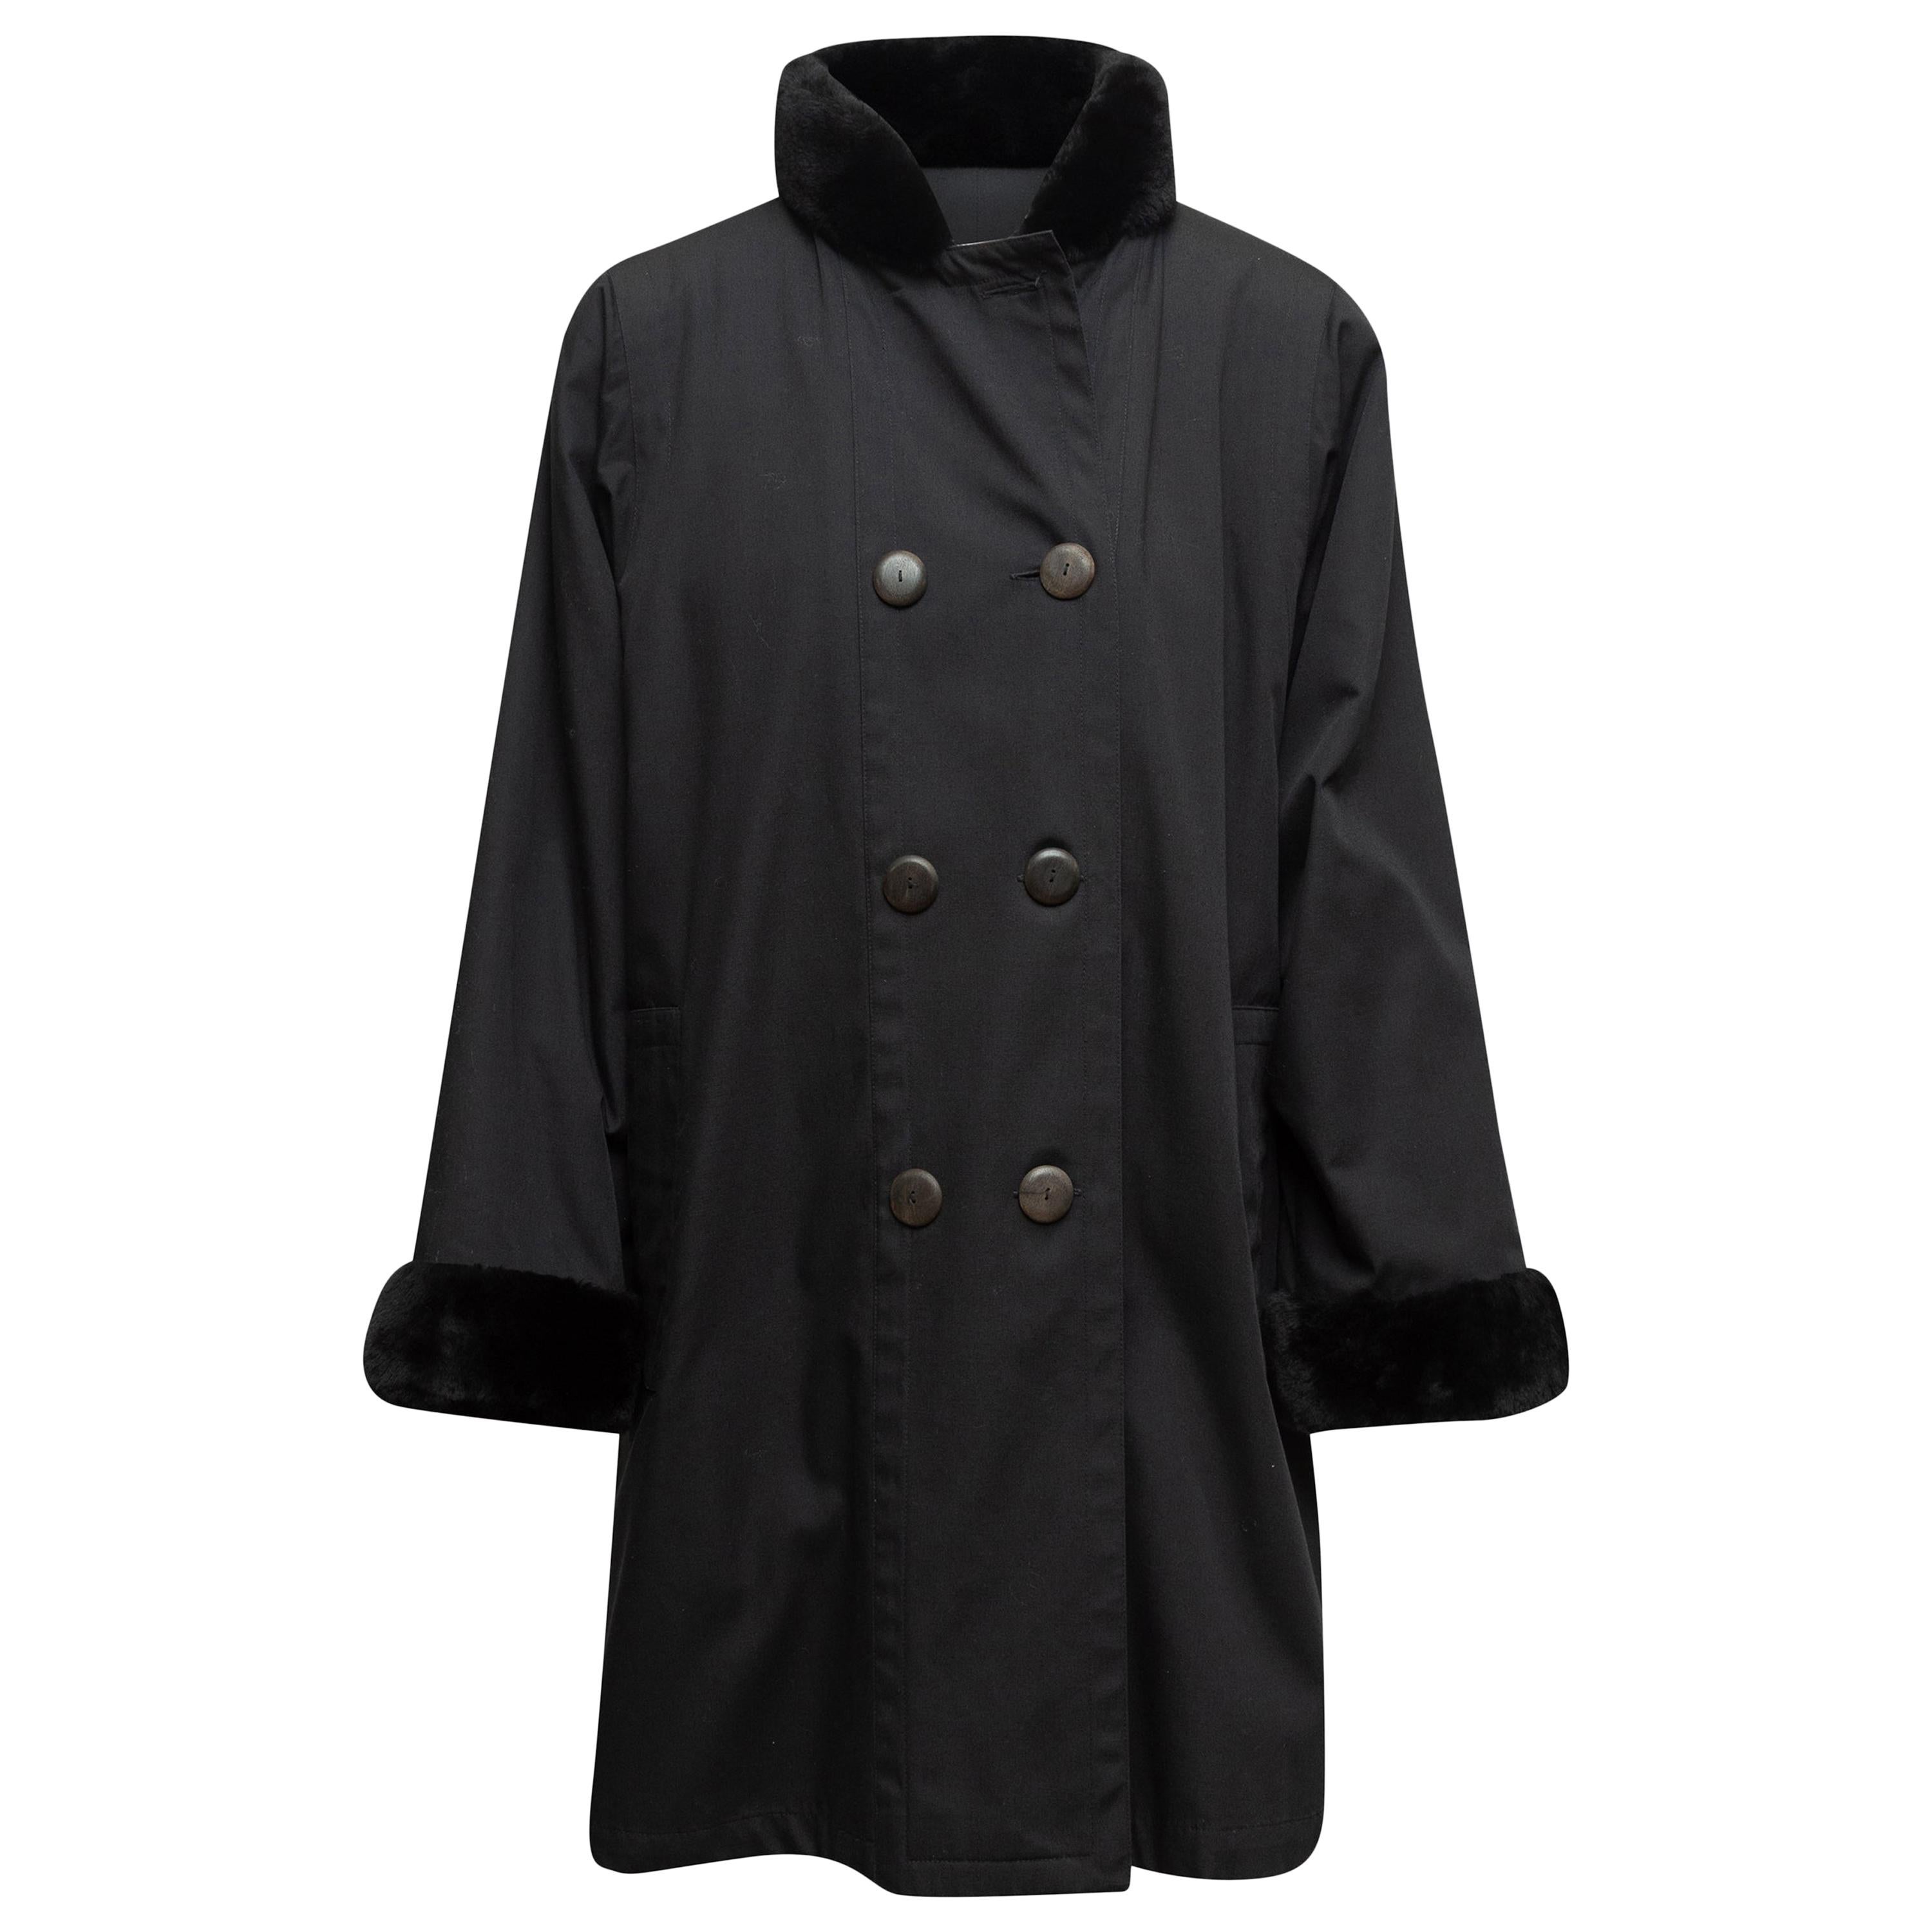 Yves Saint Laurent Black Fur-Trimmed Coat